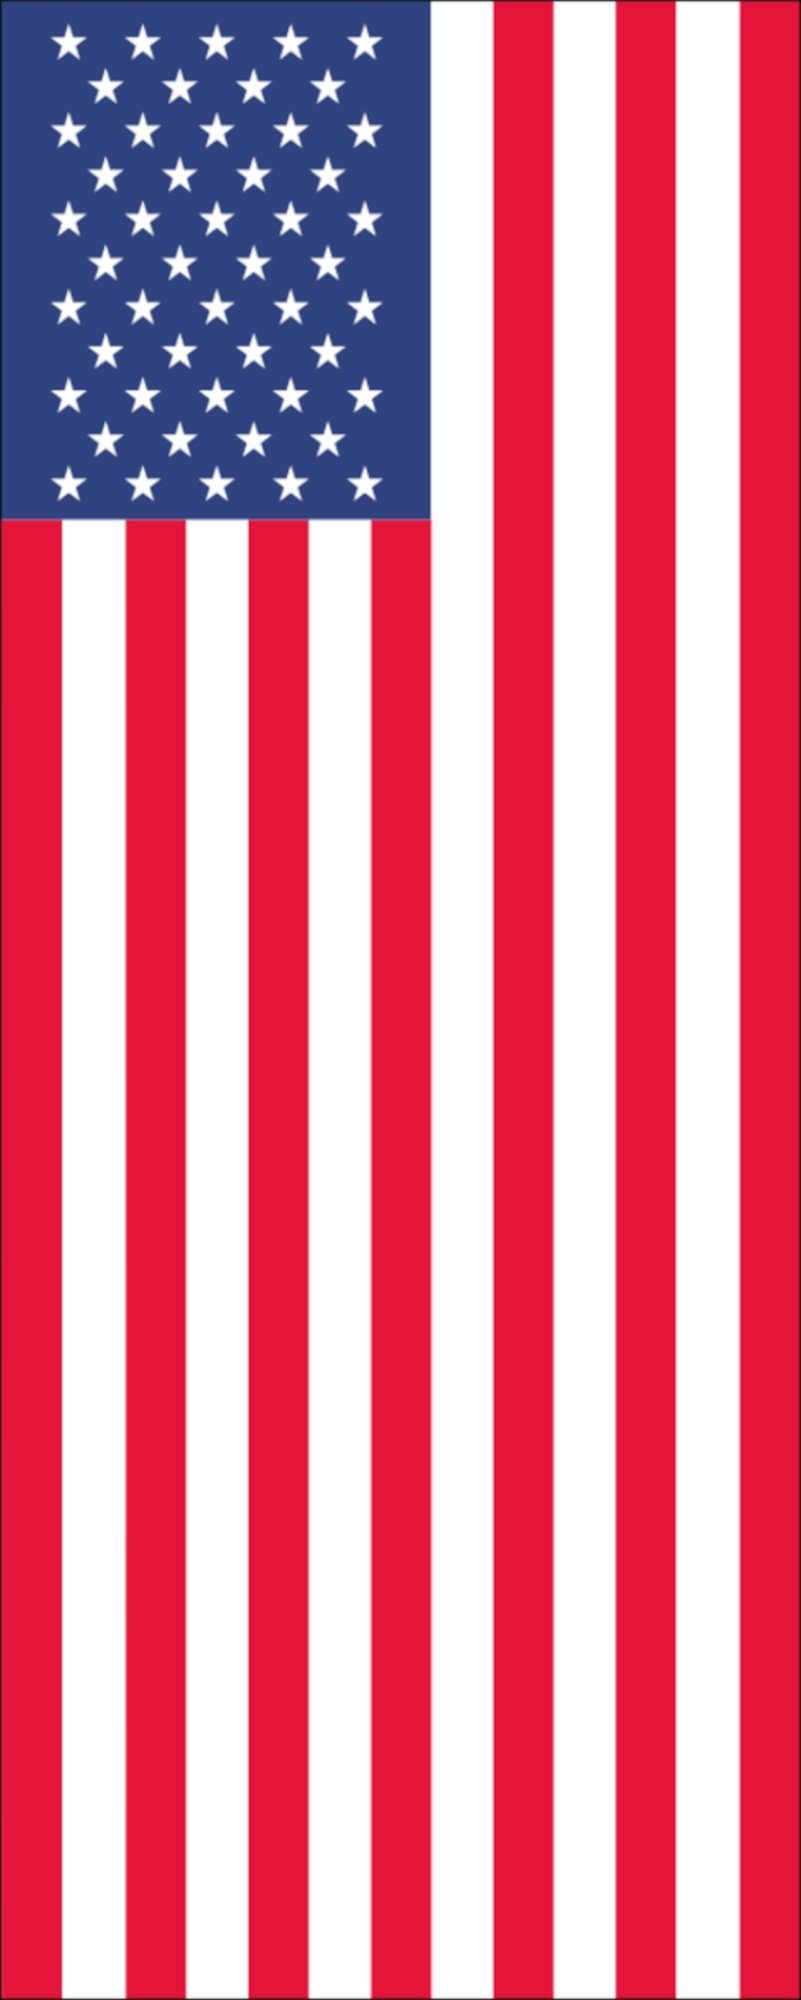 flaggenmeer Flagge Flagge USA g/m² Hochformat 110